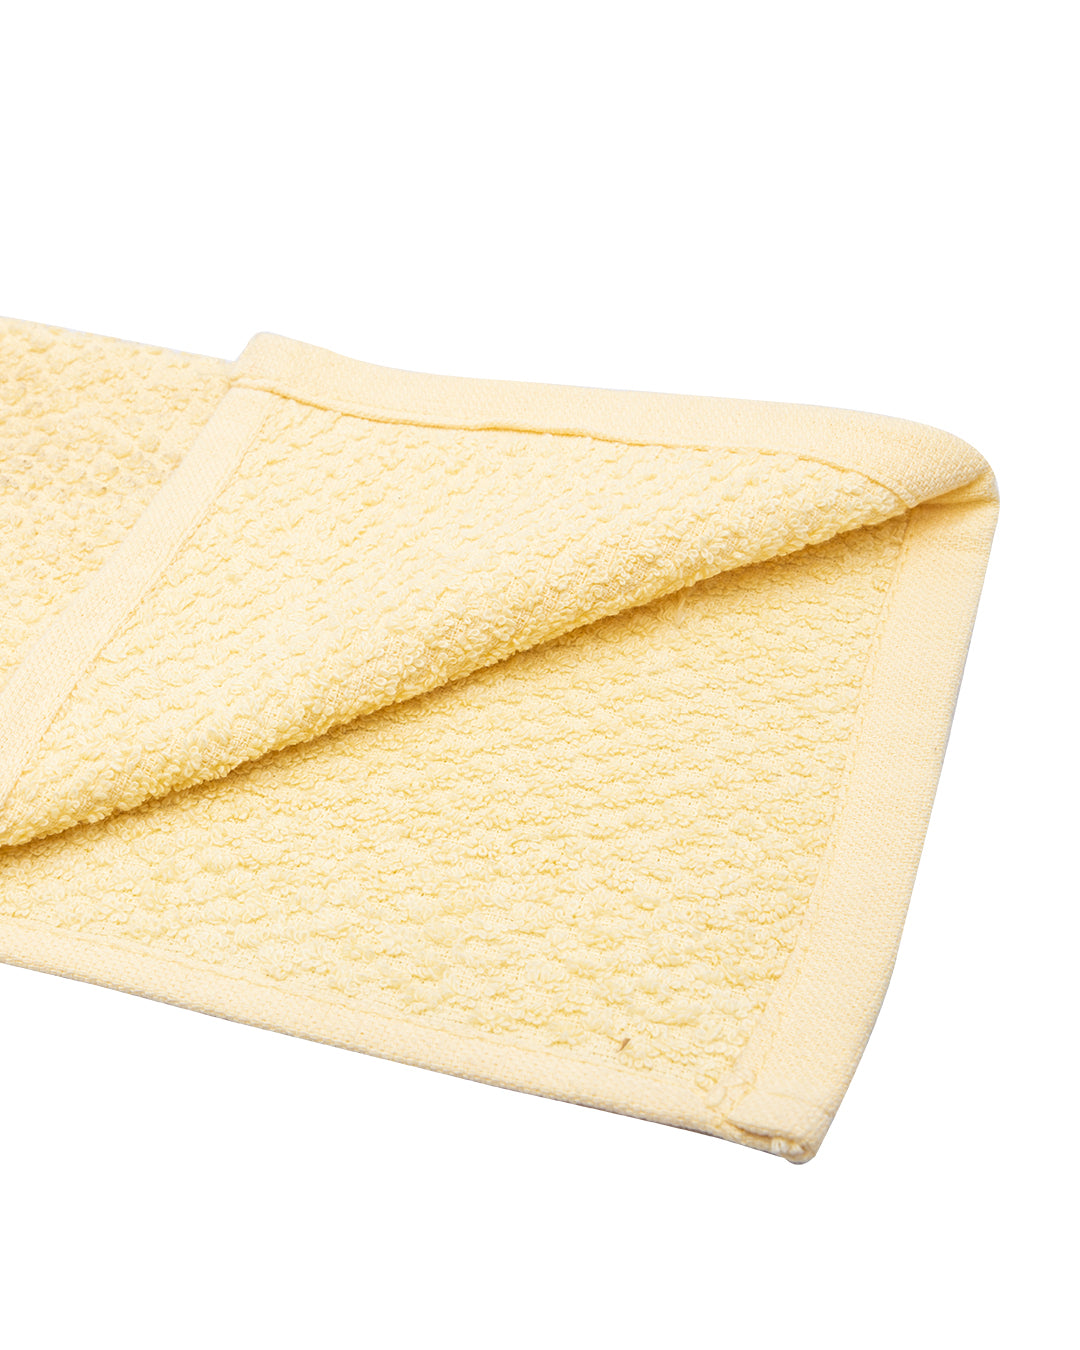 VON CASA Face Towel, Rose, Yellow, Cotton, Set of 3